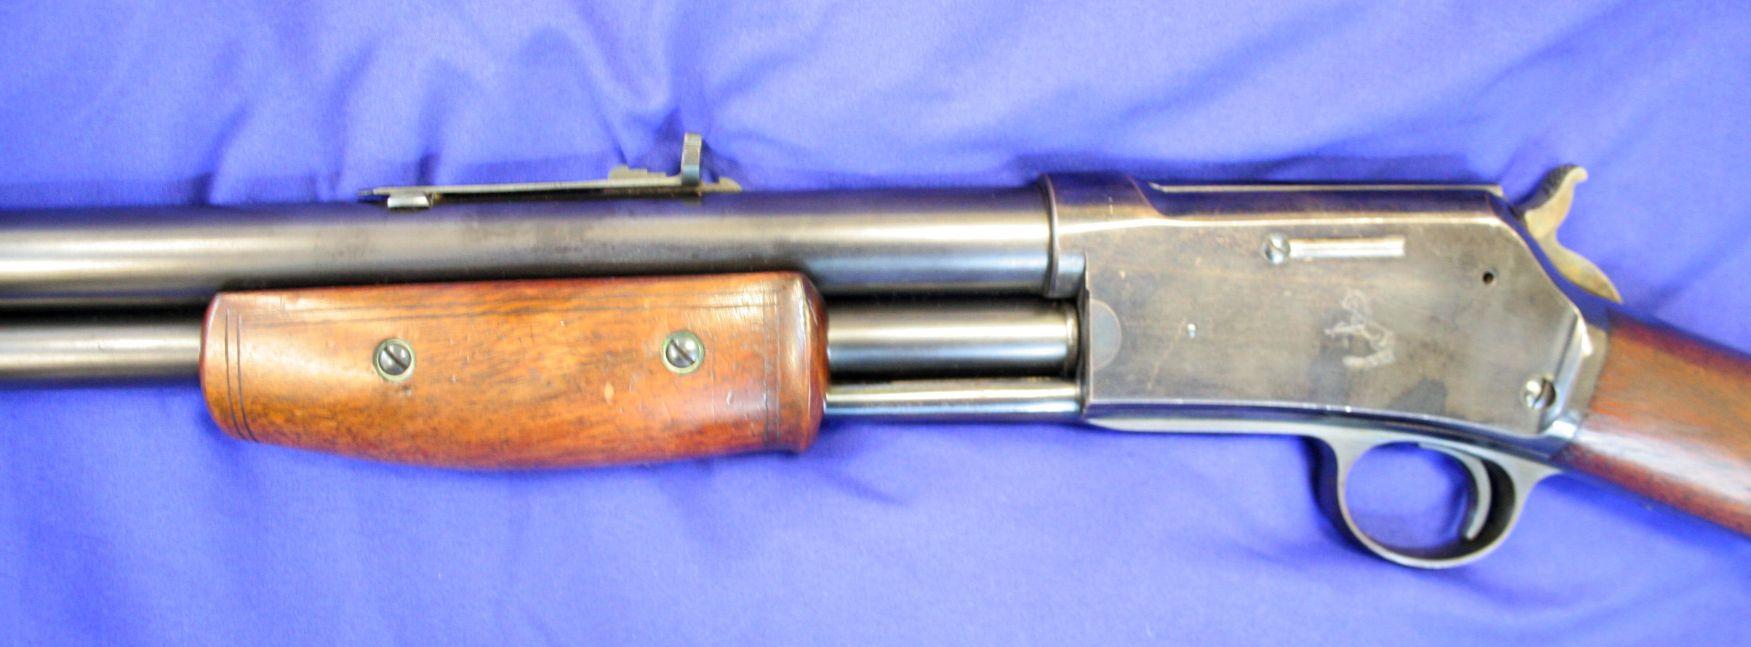 Colt Lightning Pump Action Rifle .44 caliber